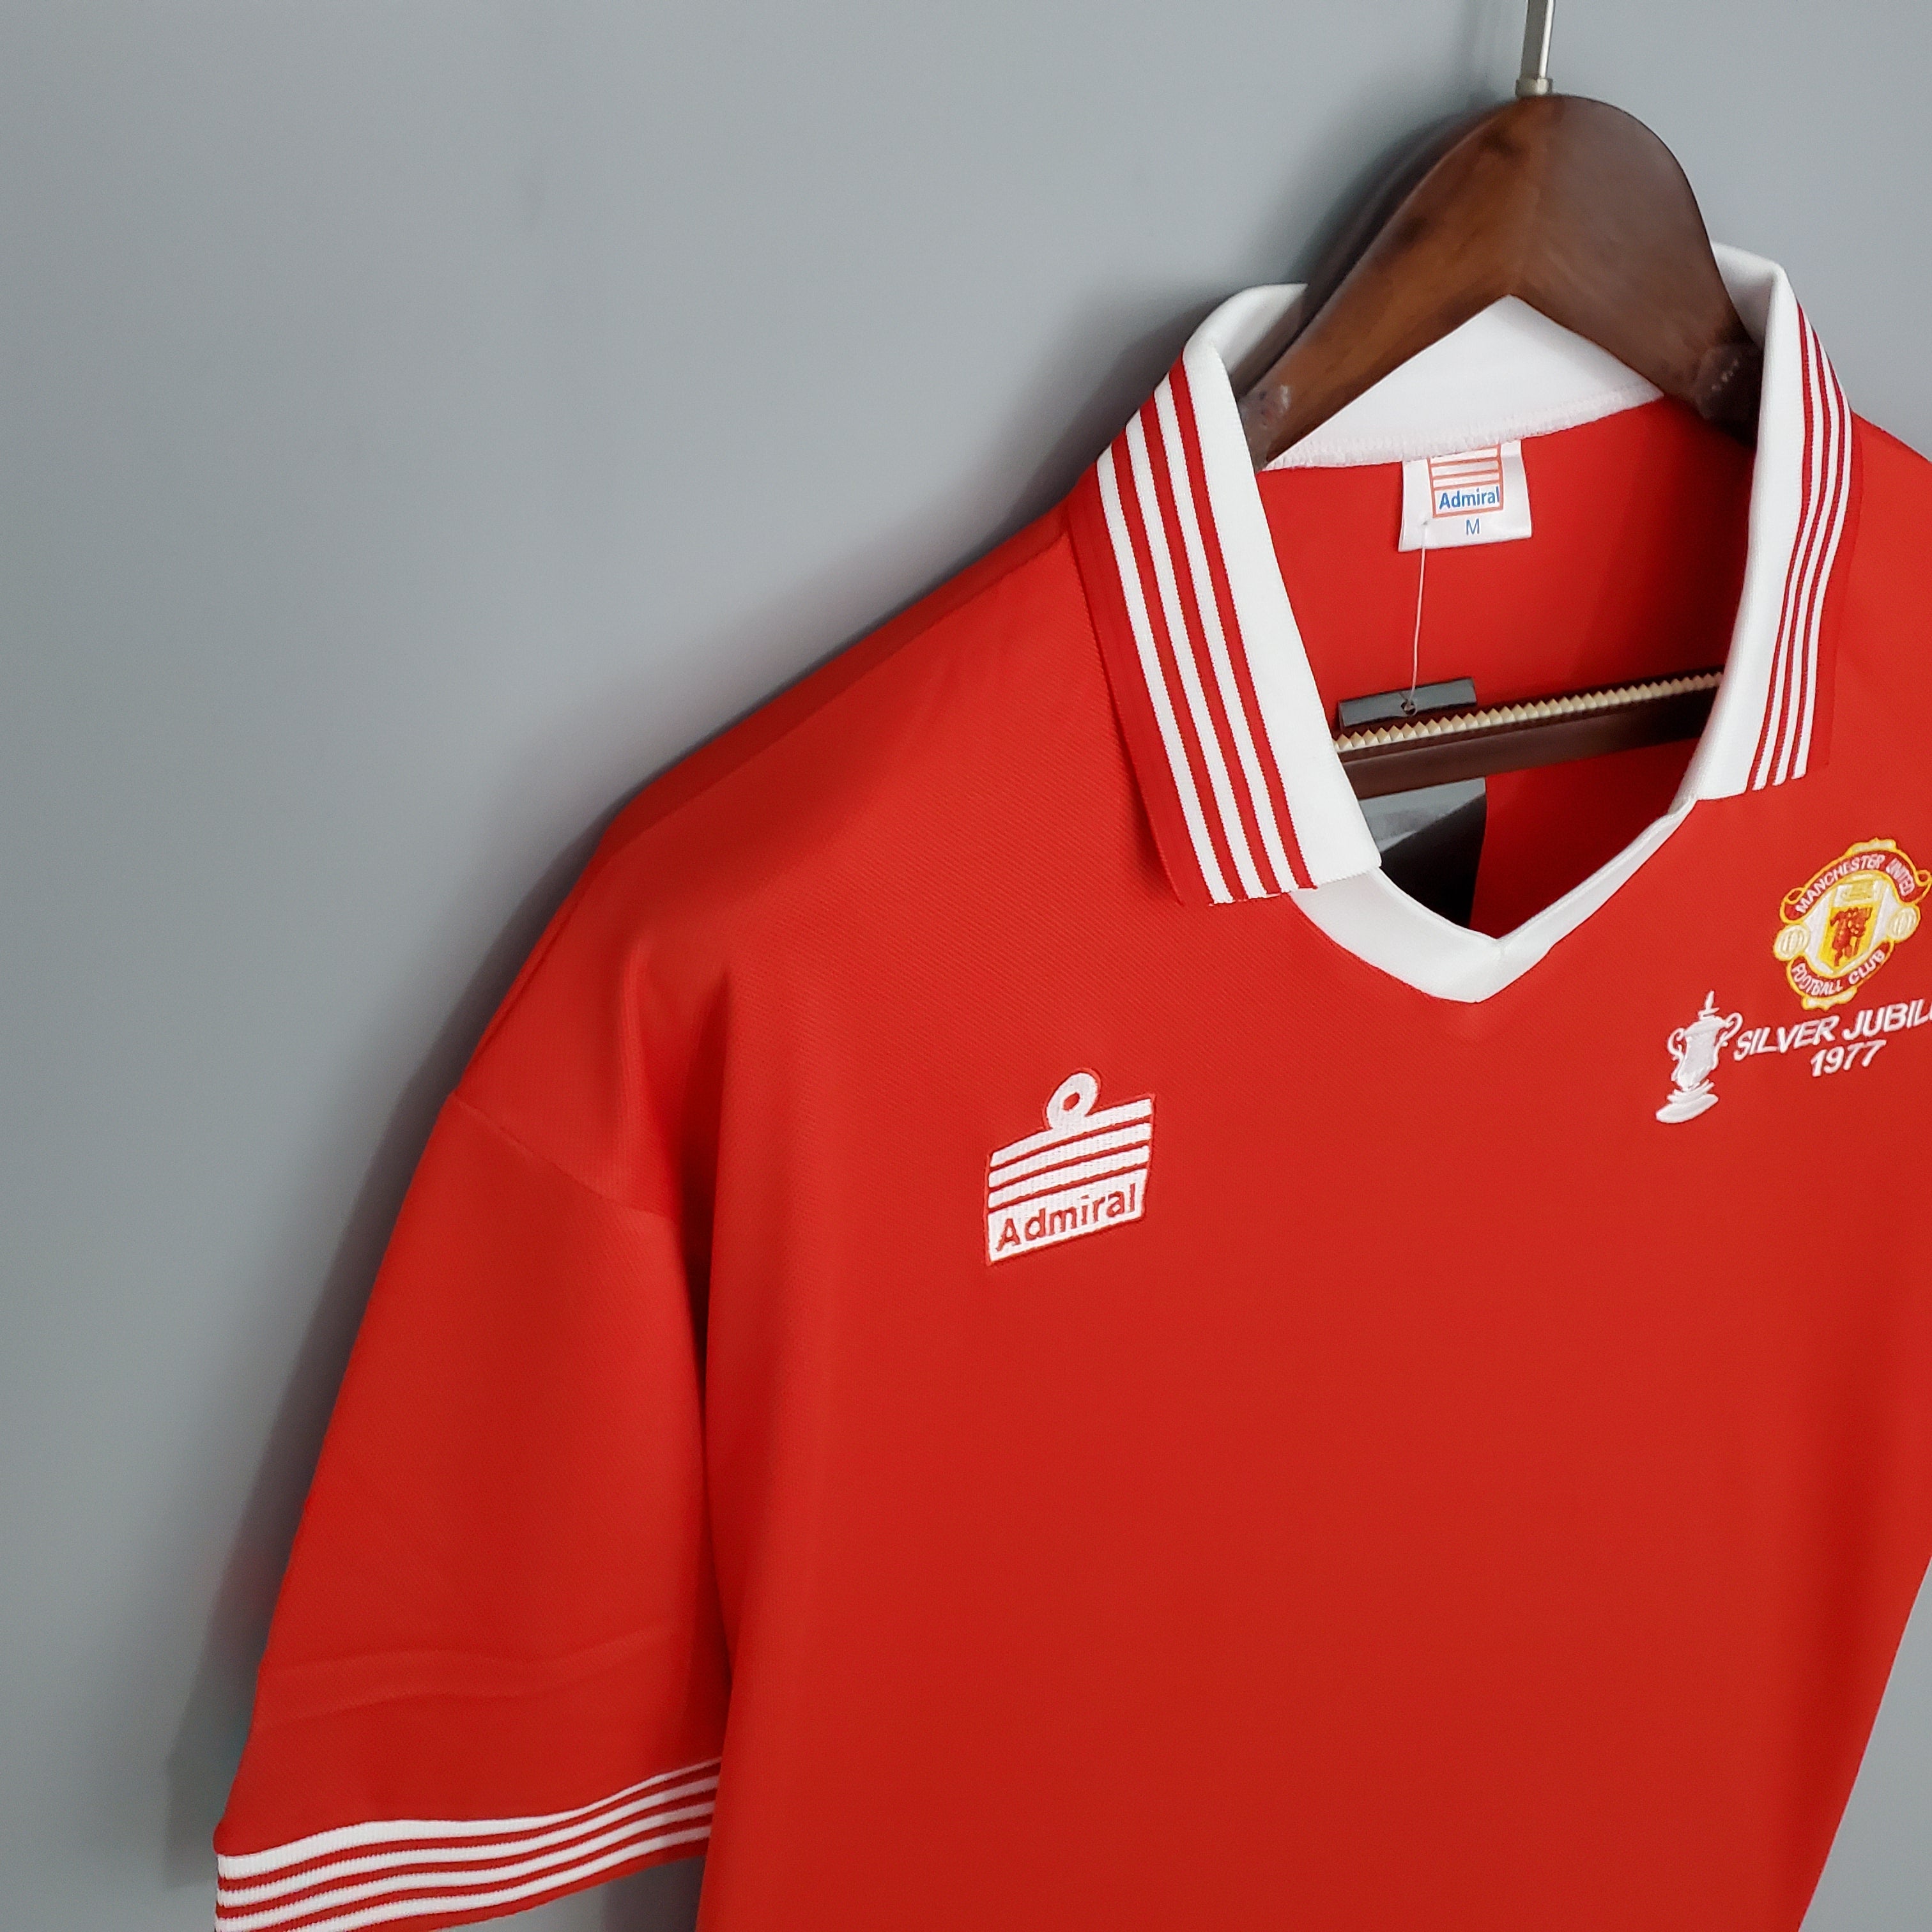 Manchester United 1977 retro shirt 